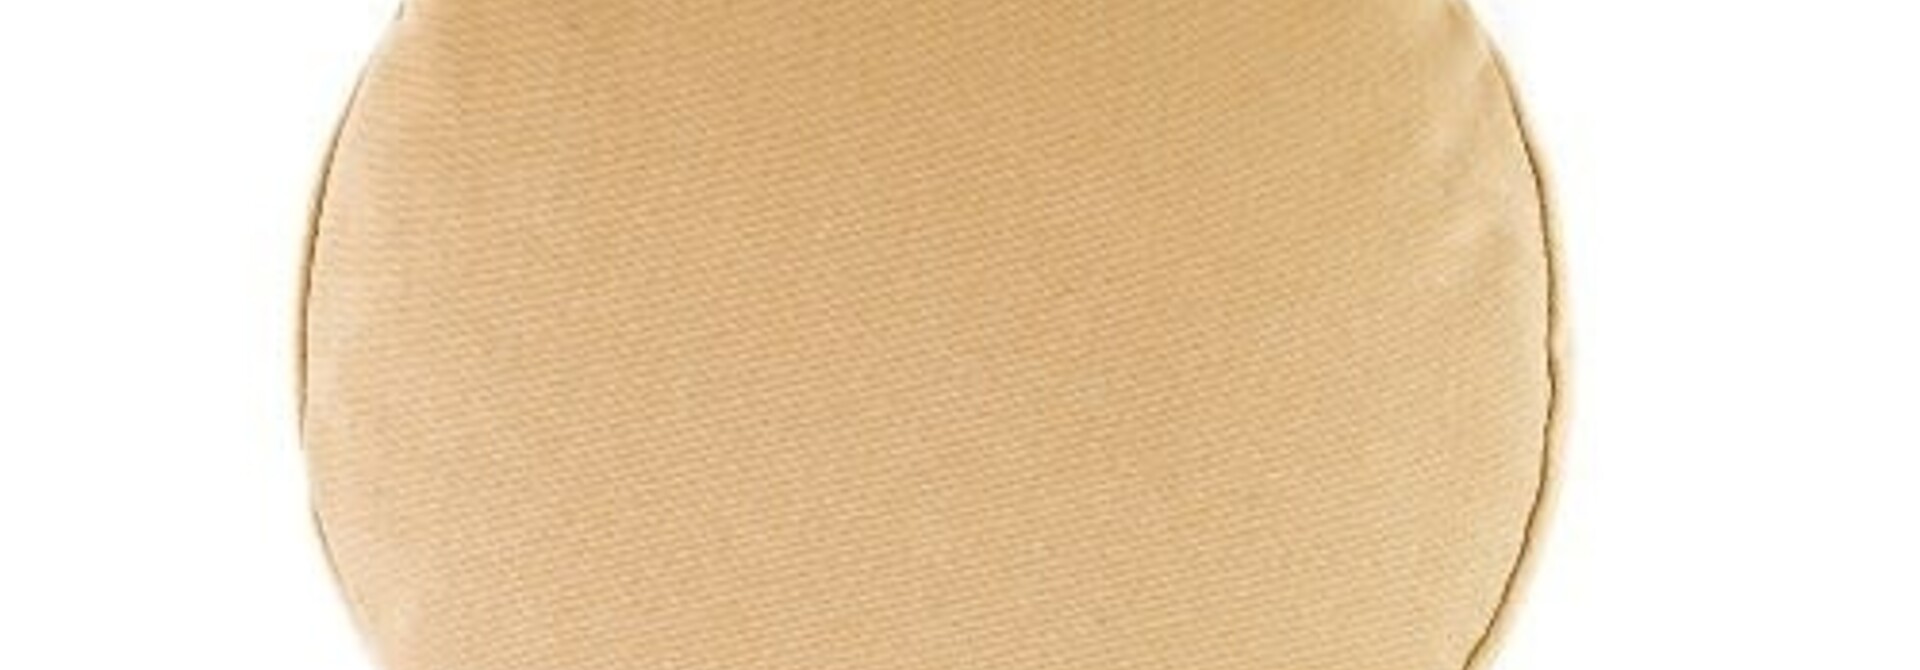 Yogisha Meditationskissen Deluxe 5 cm hoch